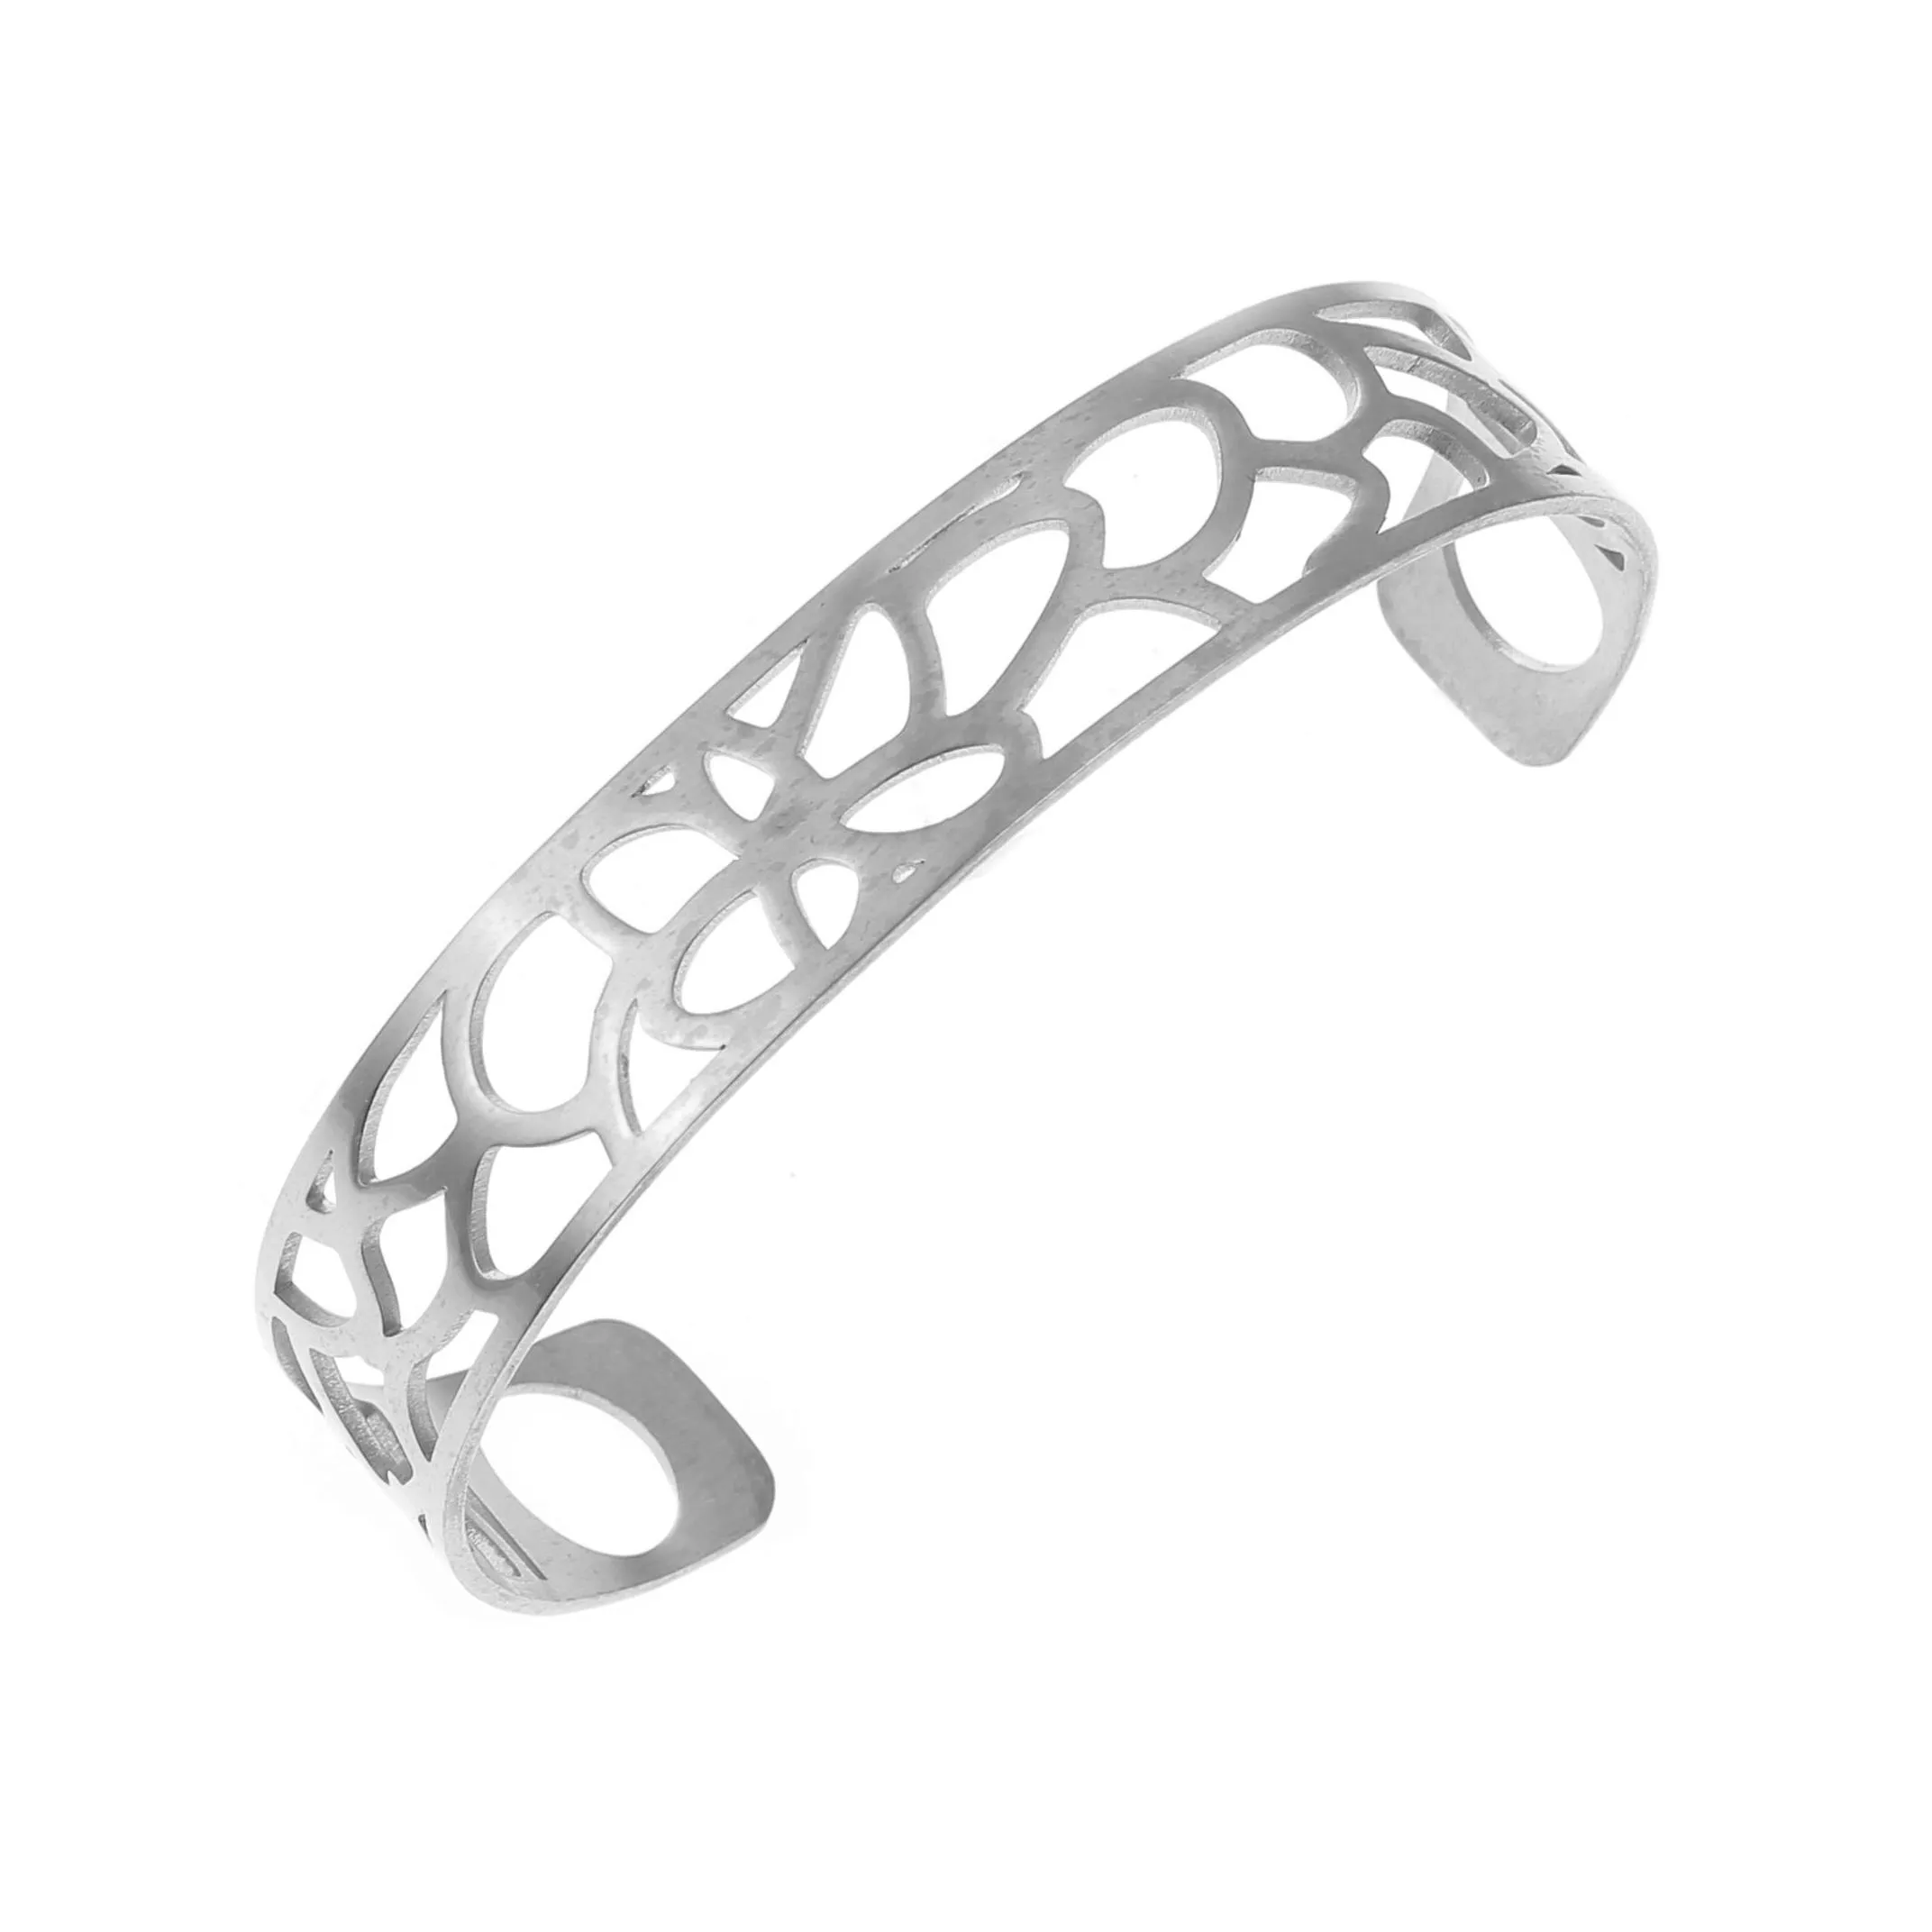 legenstar lily bracelets&bangles for women stainless steel interchangeable leather diy bijoux manchette femme bracelet pulseiras